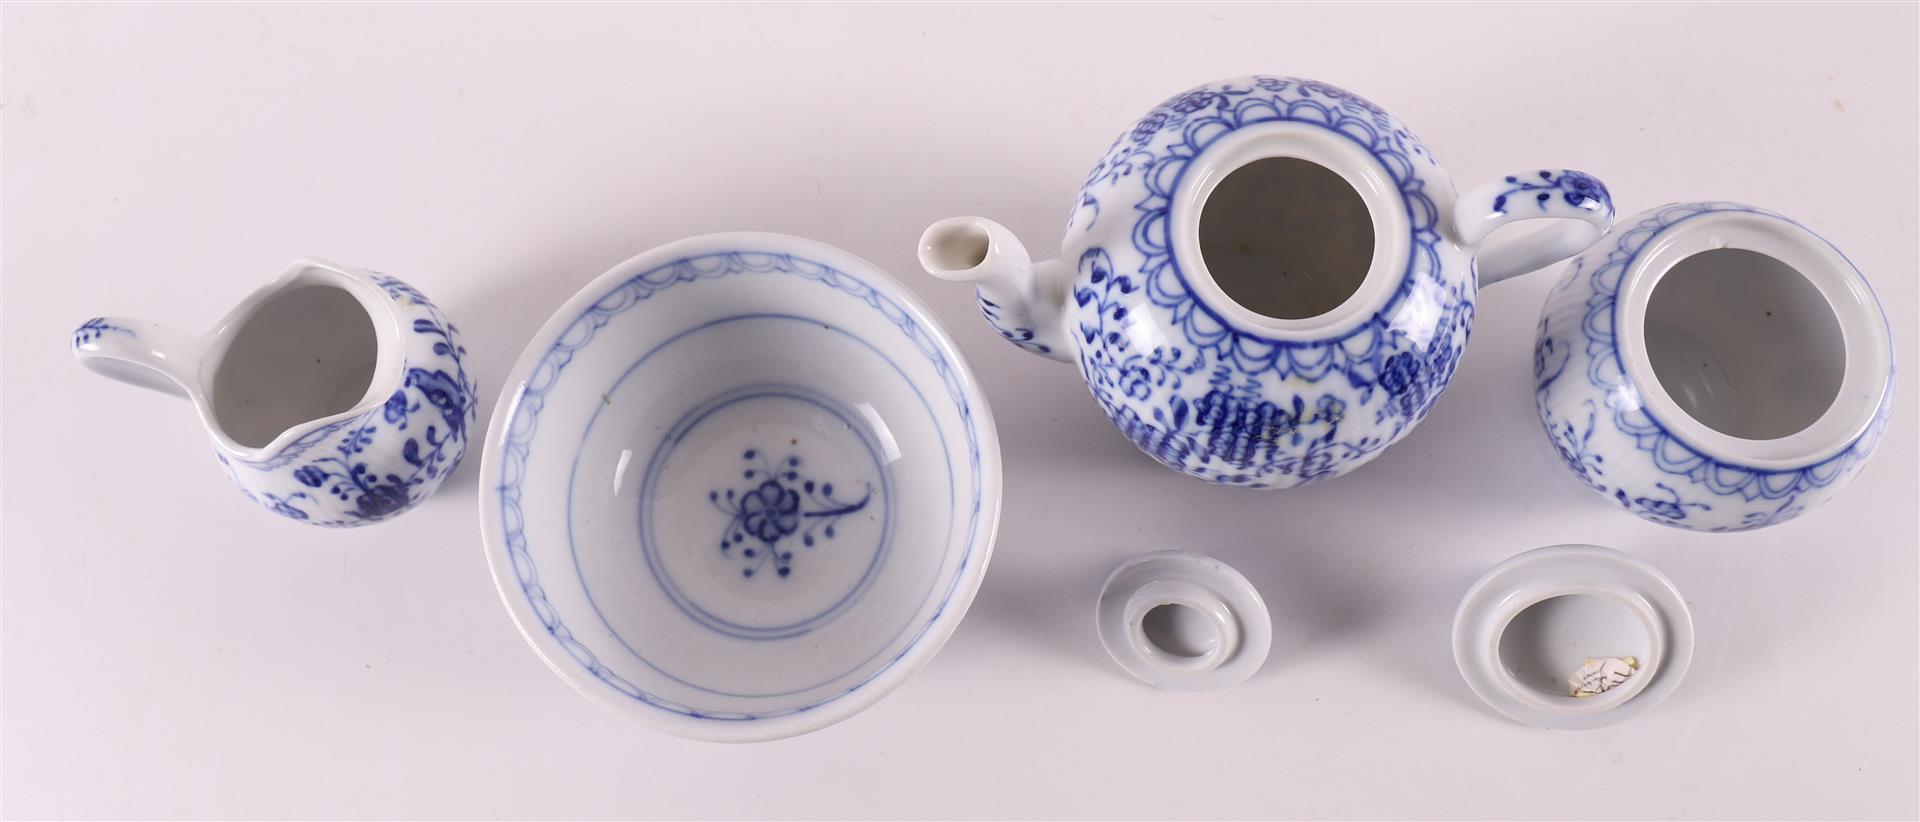 A white porcelain tea service fragment with blue Saxon decor, circa 1900 - Image 4 of 5